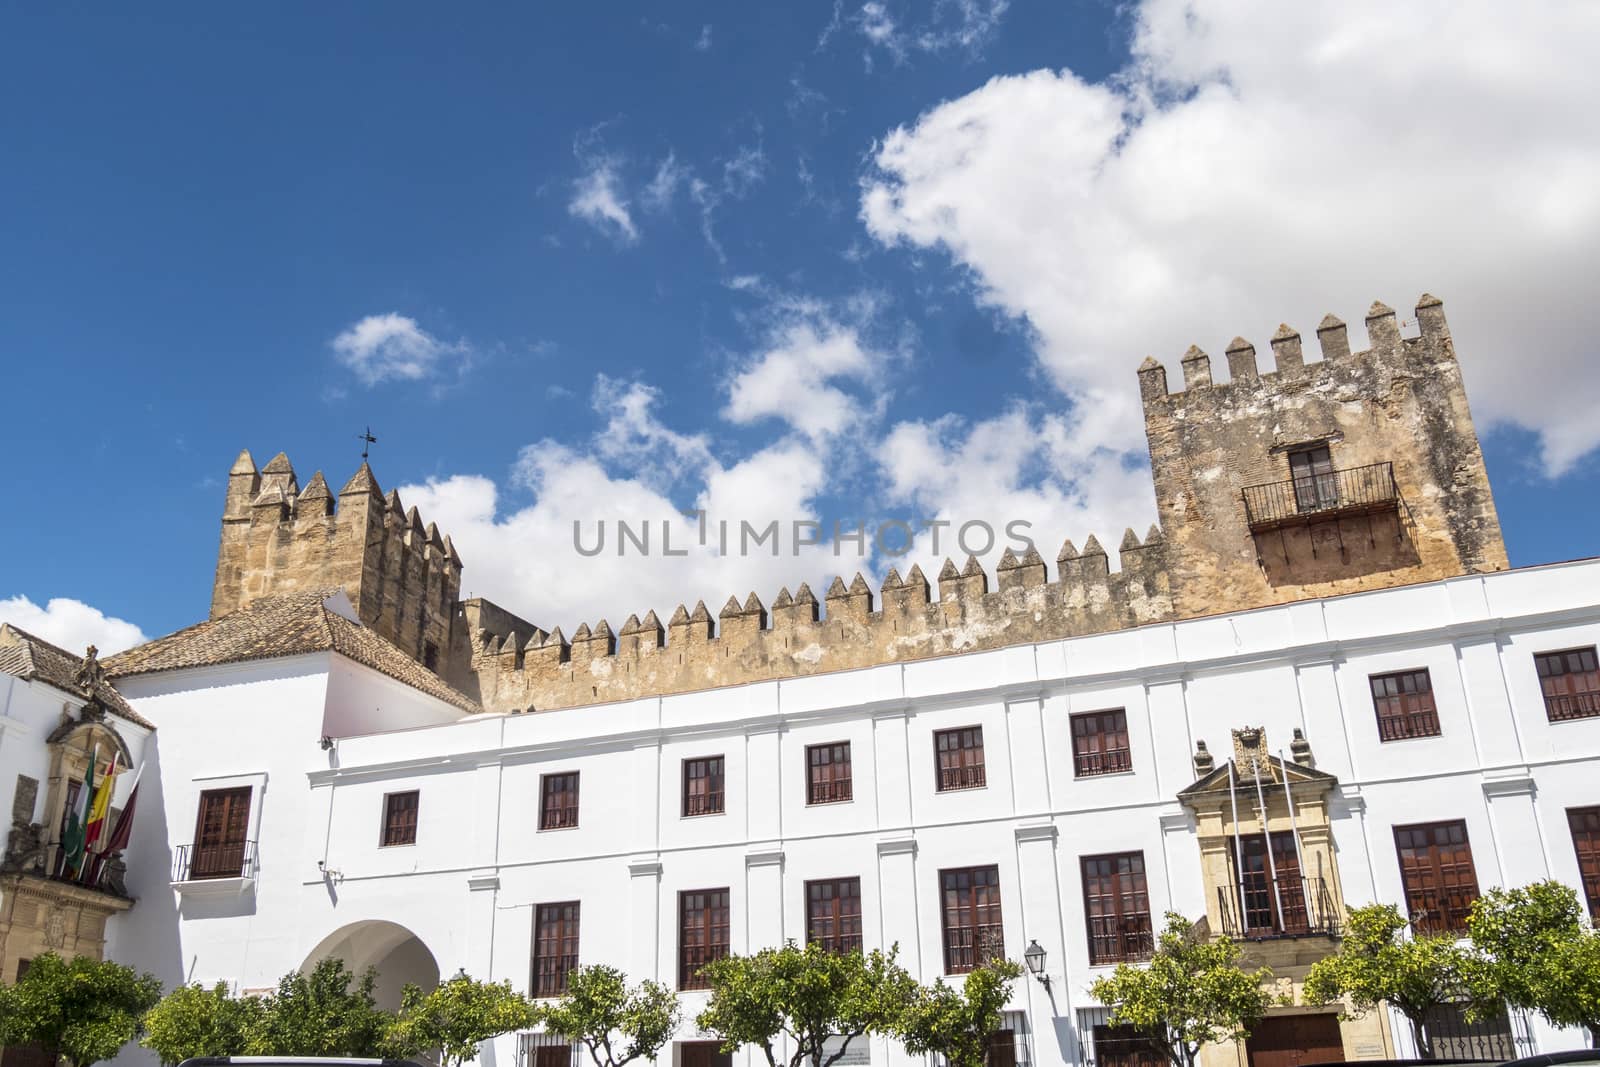 Ducal castle of Arcos de la Frontera